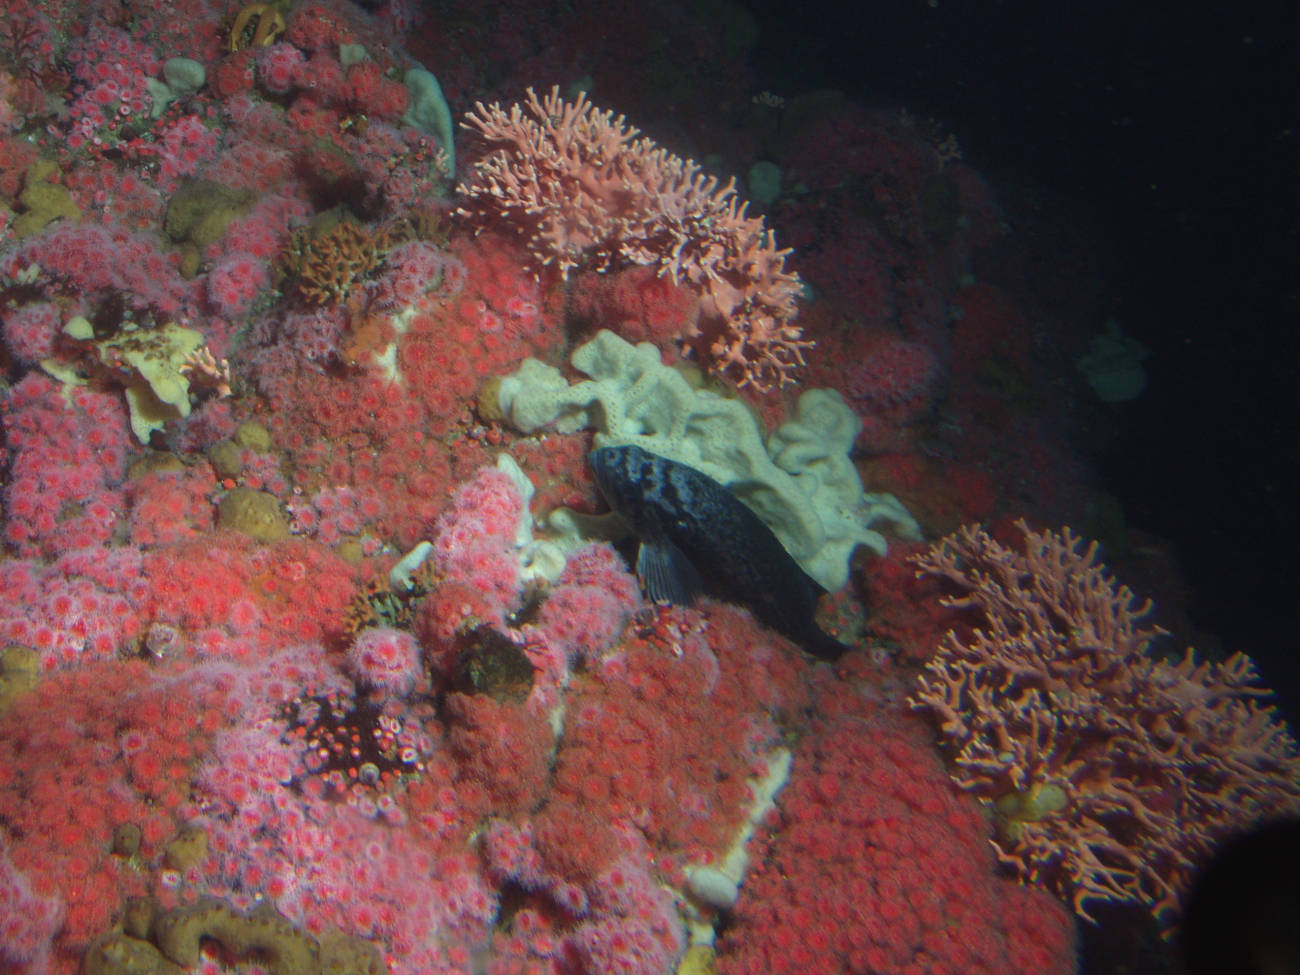 Blue rockfish (Sebastes mystinus) among invertebrates on densely coveredrocky reef with foliose sponges, strawberry anemones and hydrocoralat 50 meters